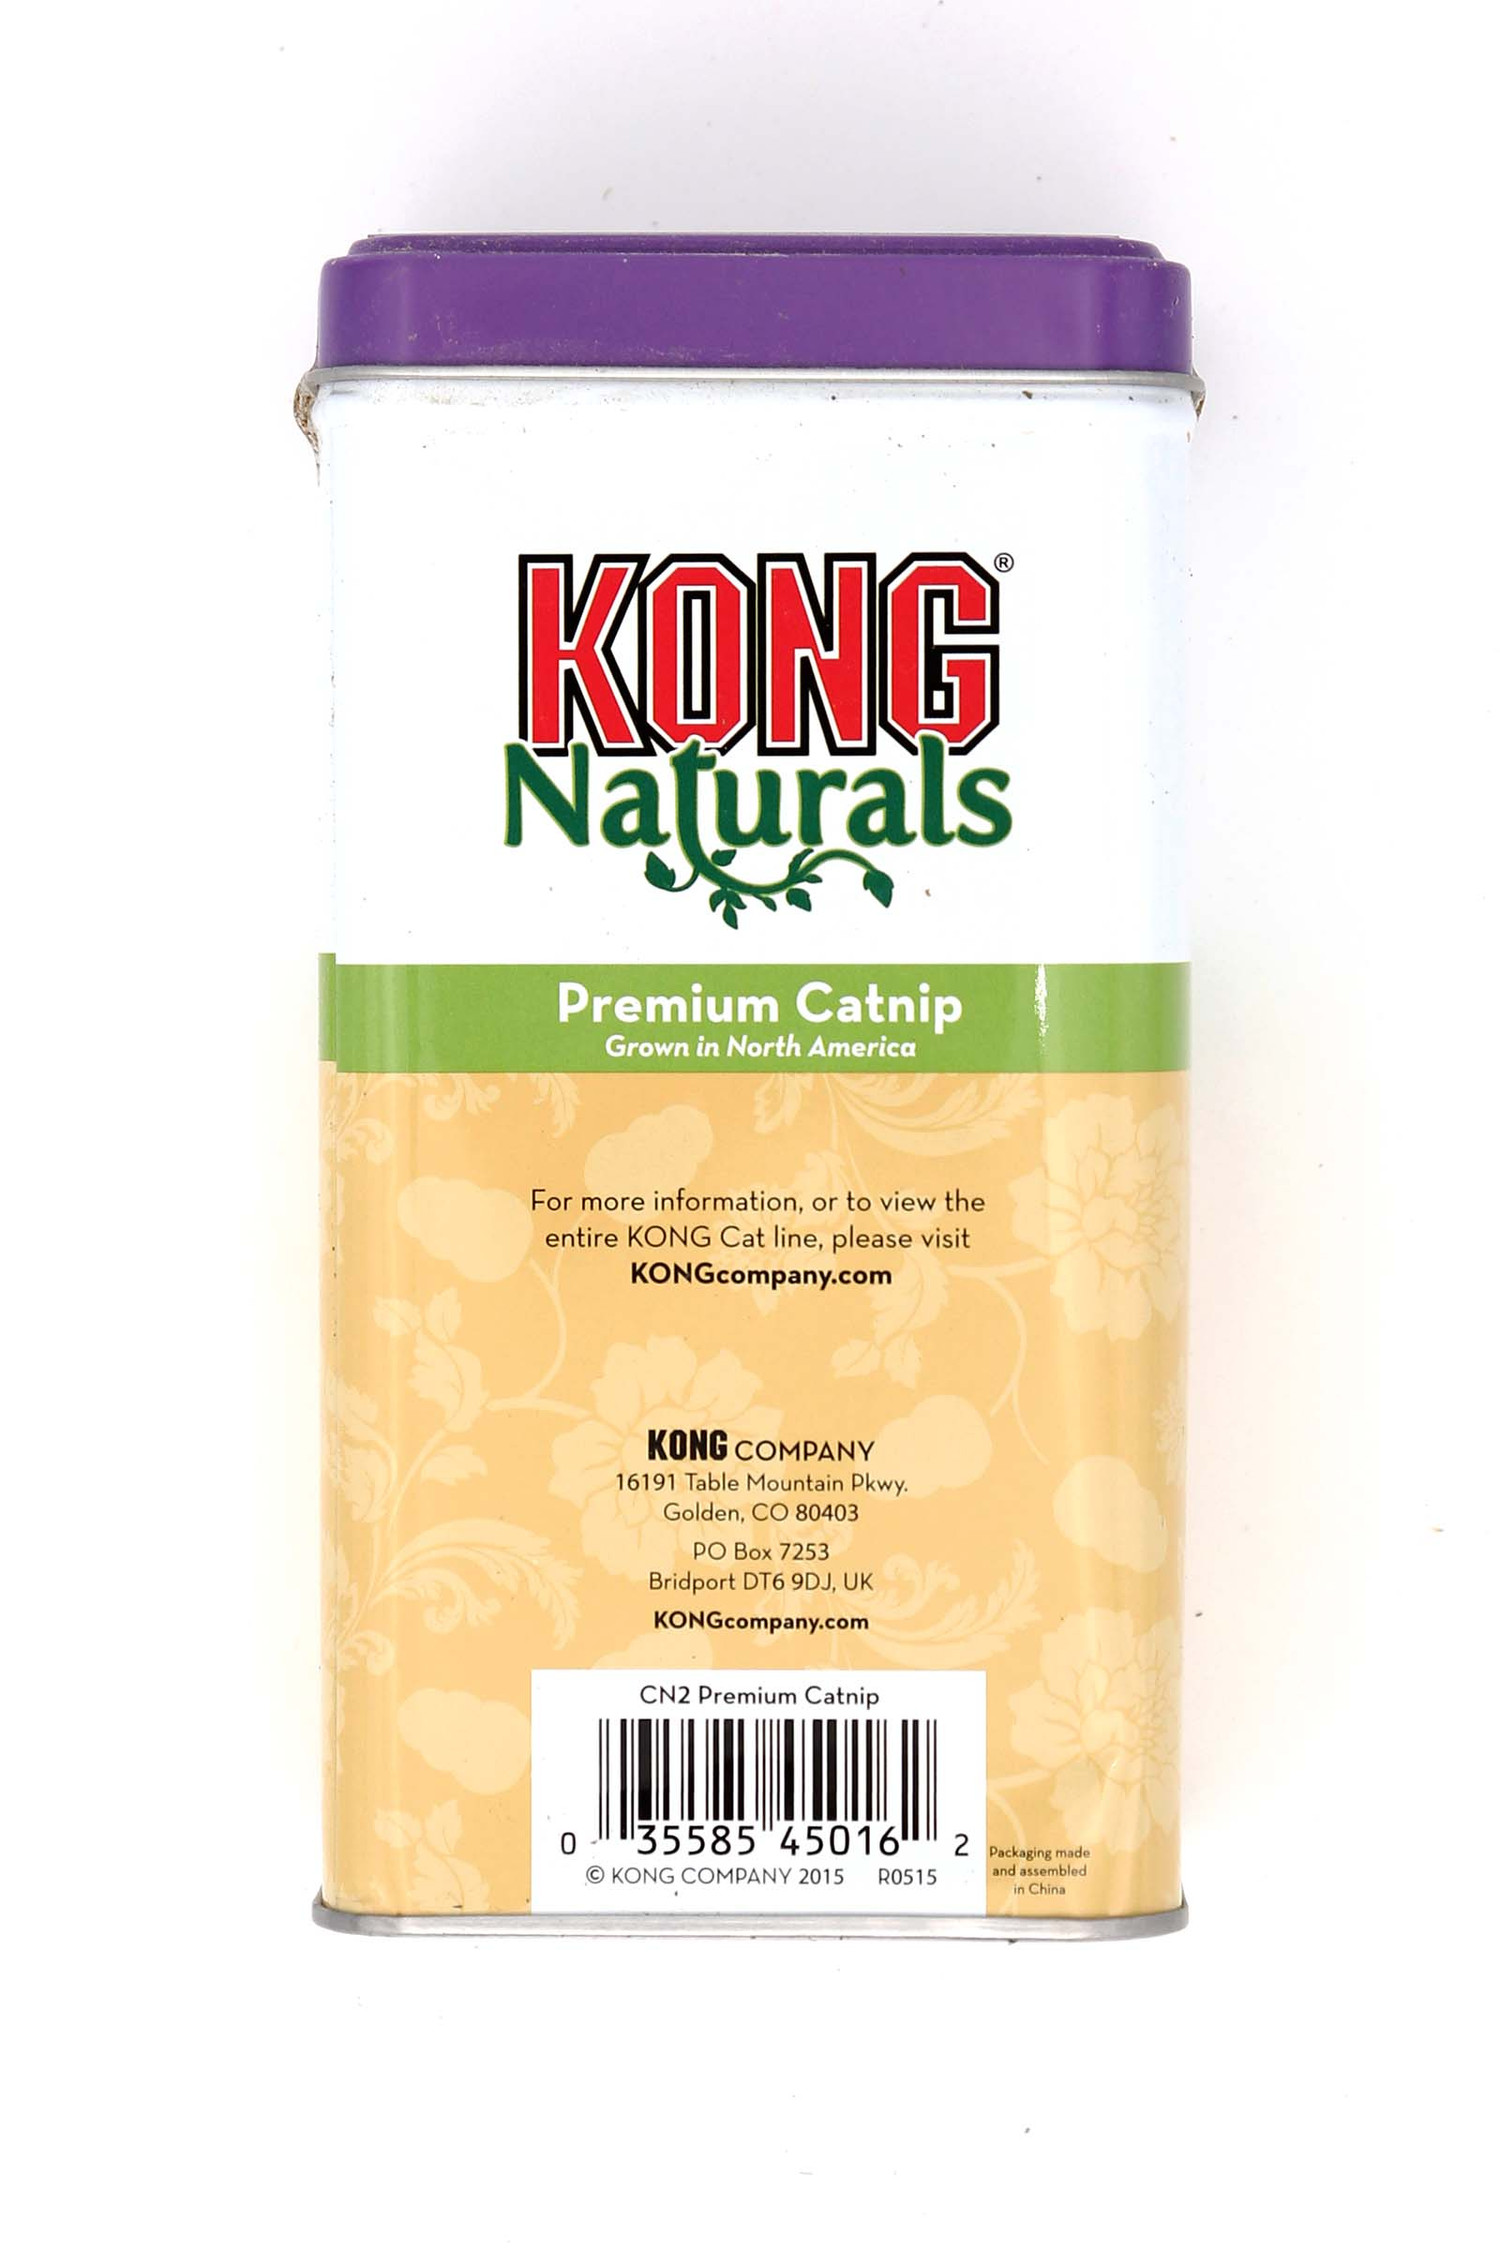 KONG Naturals Premium Catnip - Grown in North America